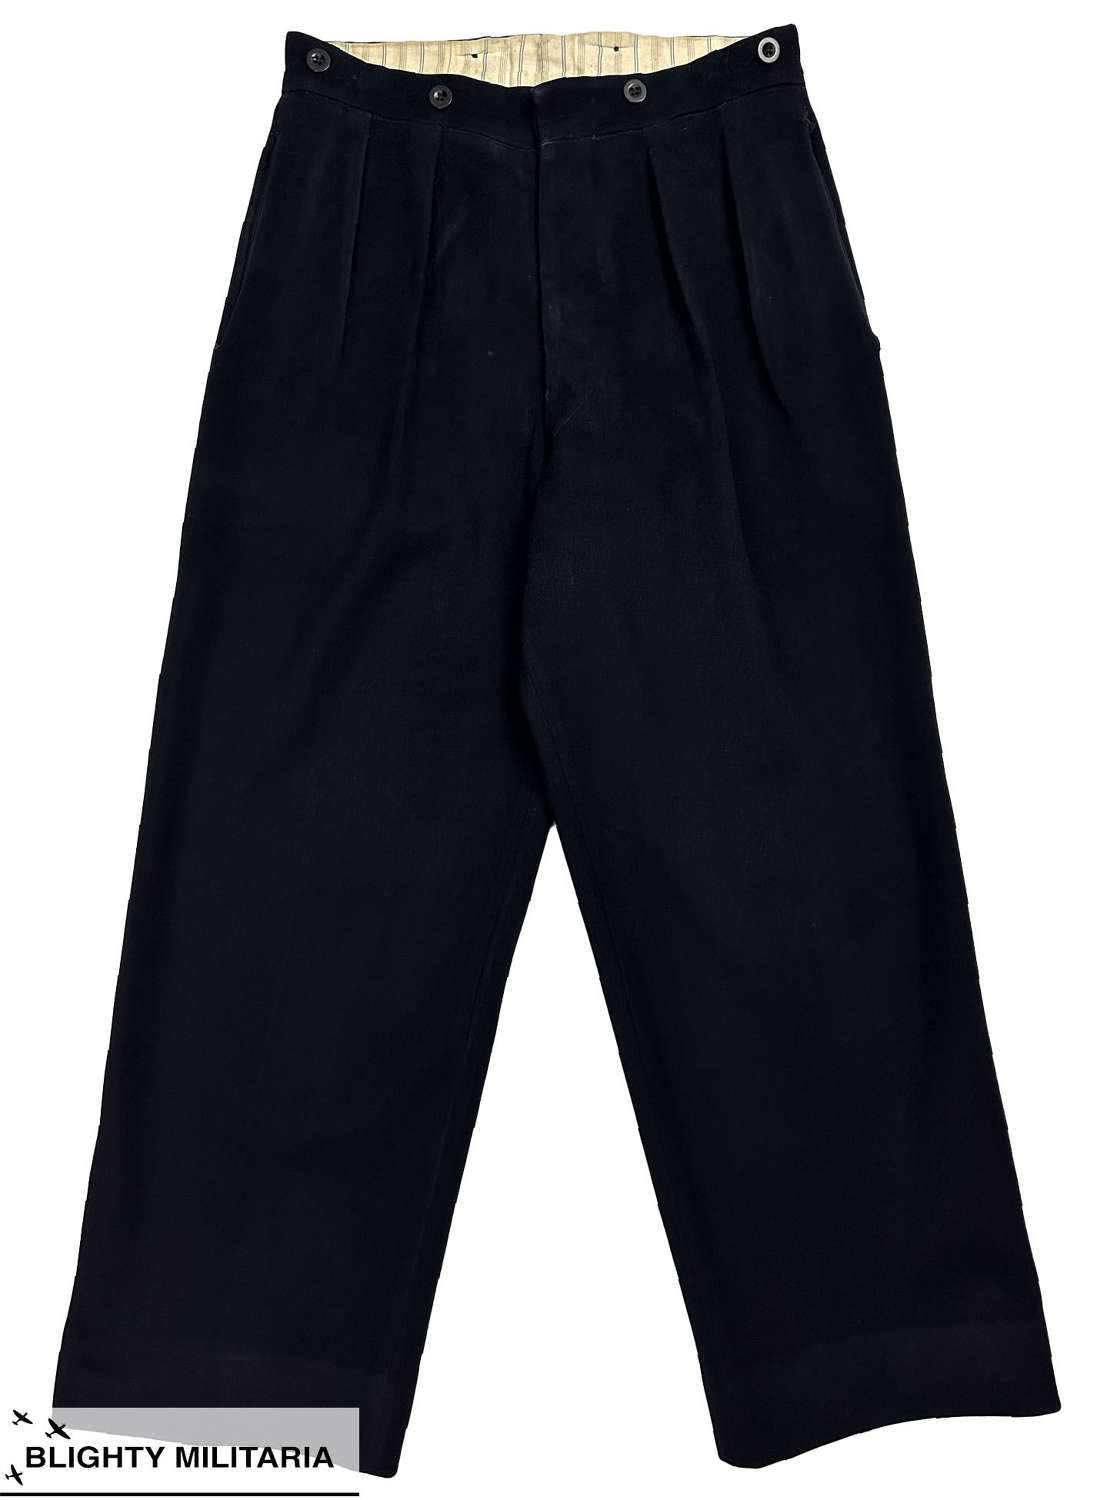 Original 1950s British Royal Navy Black Wool Officer's Trousers